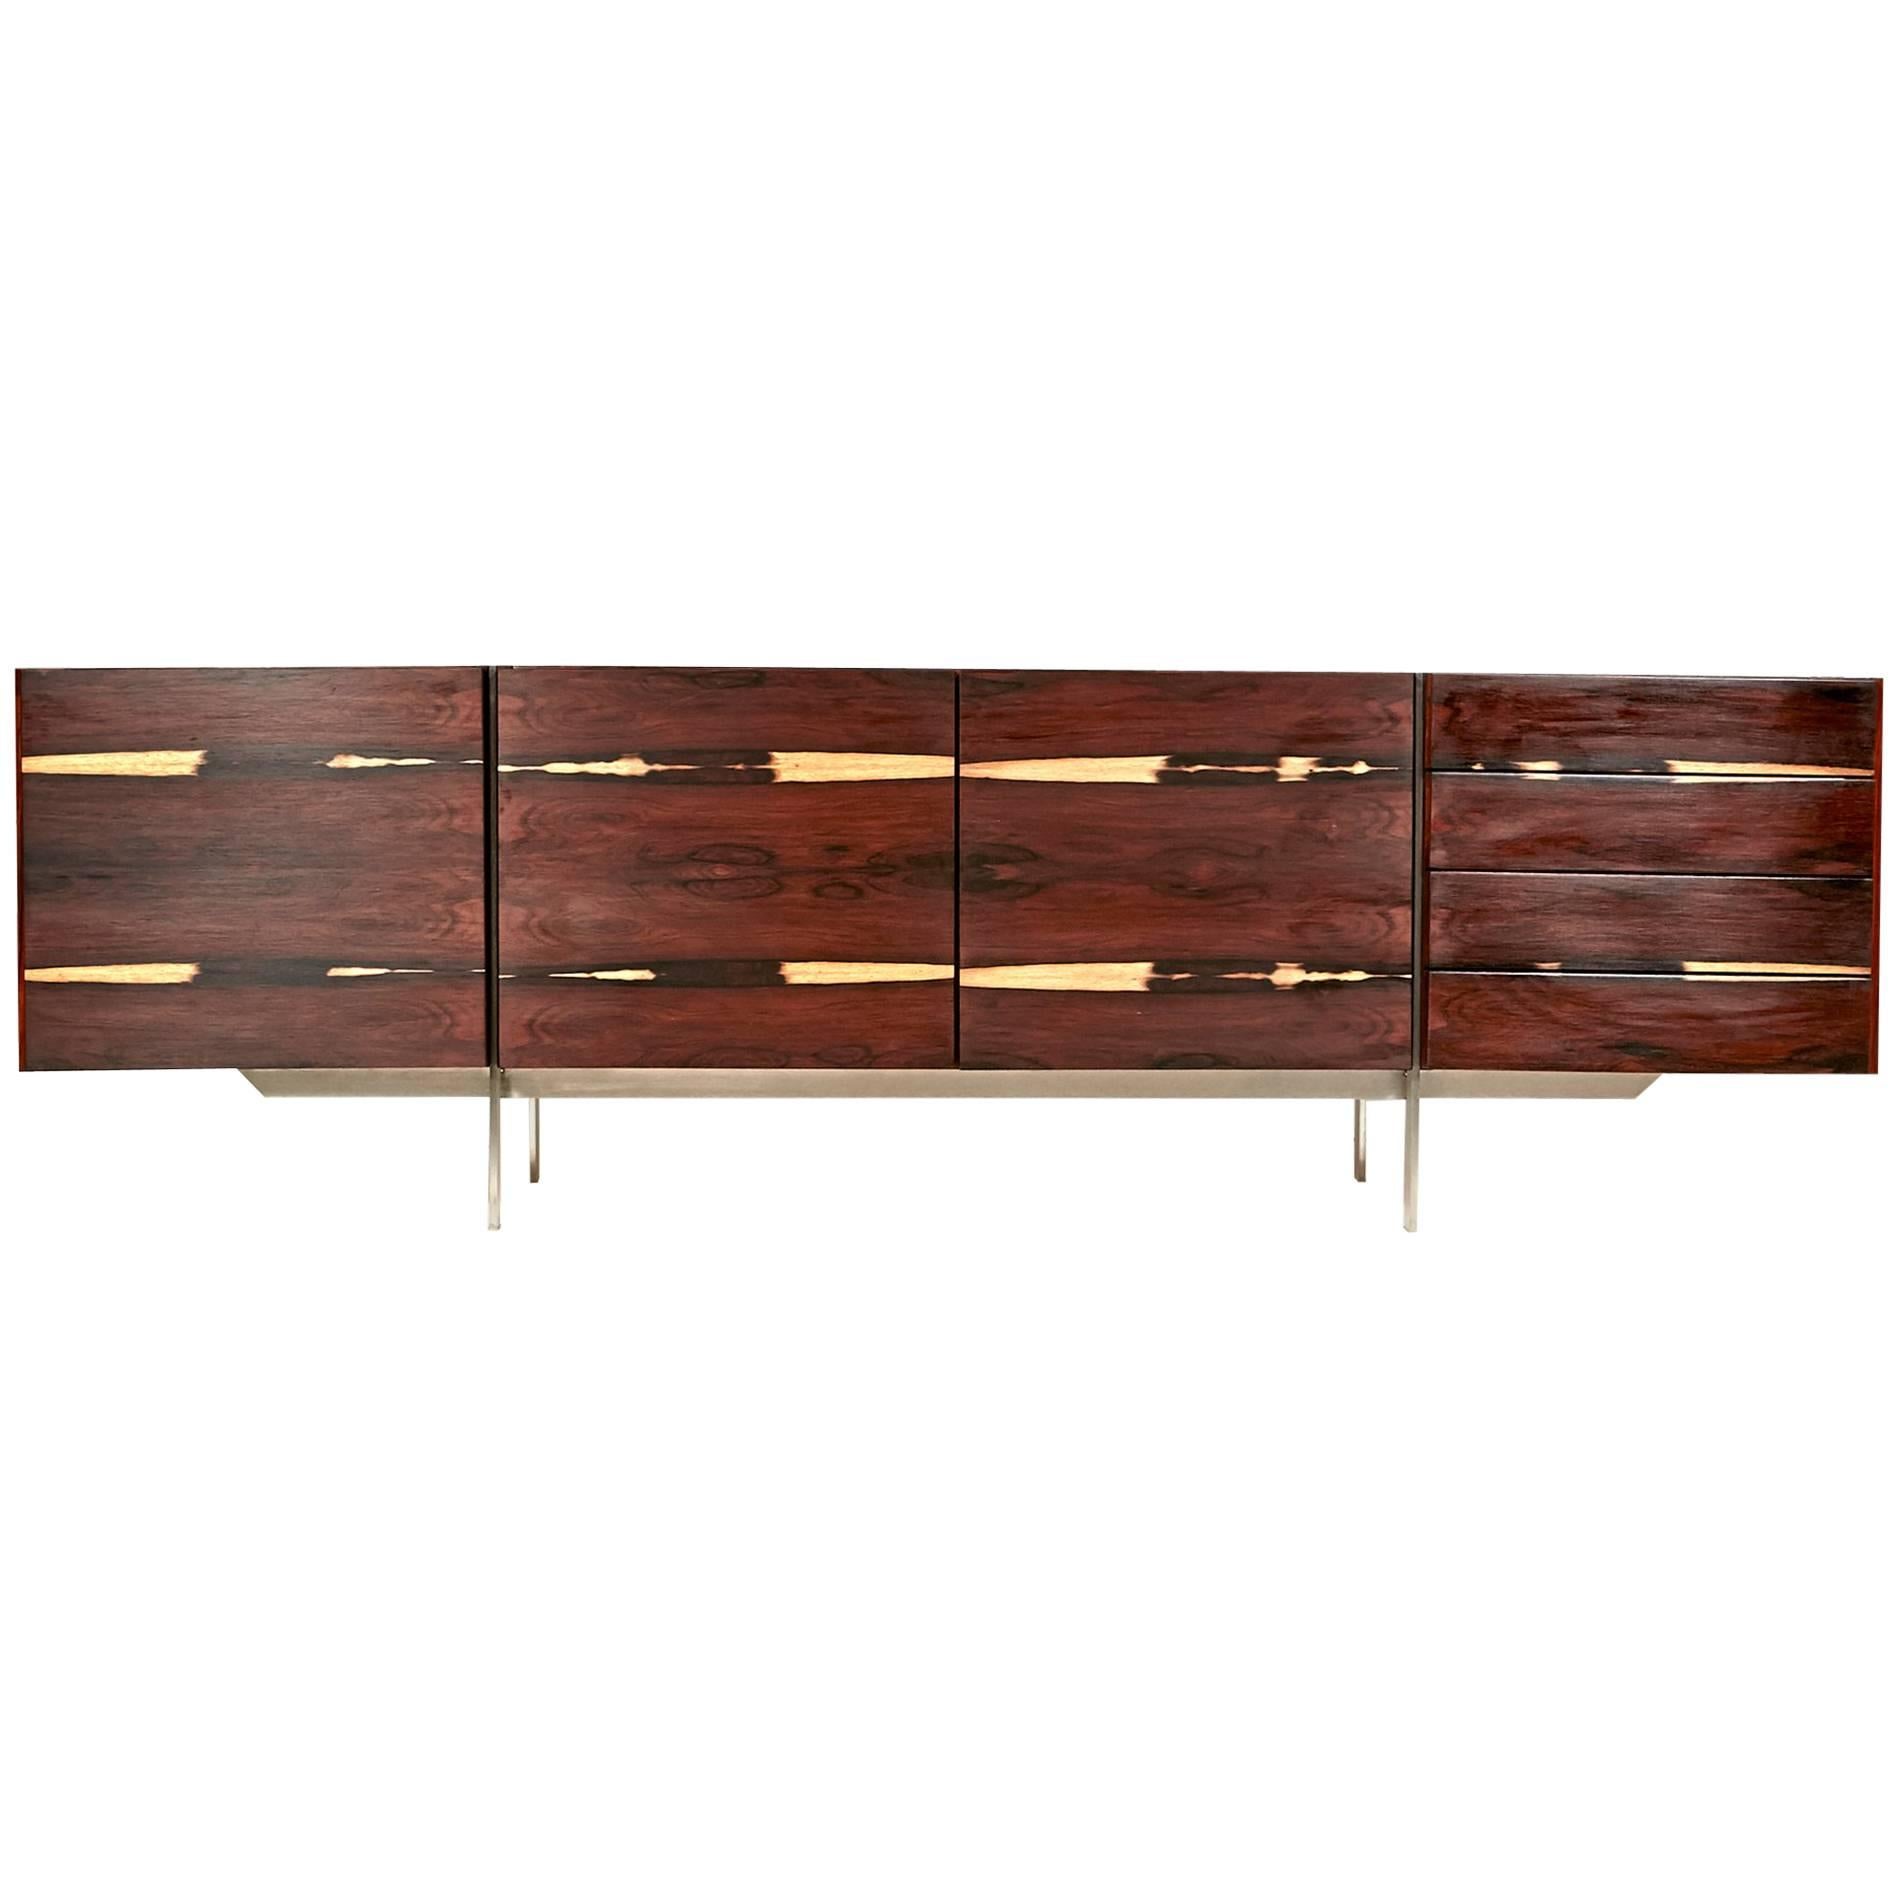 Danish Ib Kofod-Larsen Rosewood and Steel Low Sideboard, 1960s For Sale